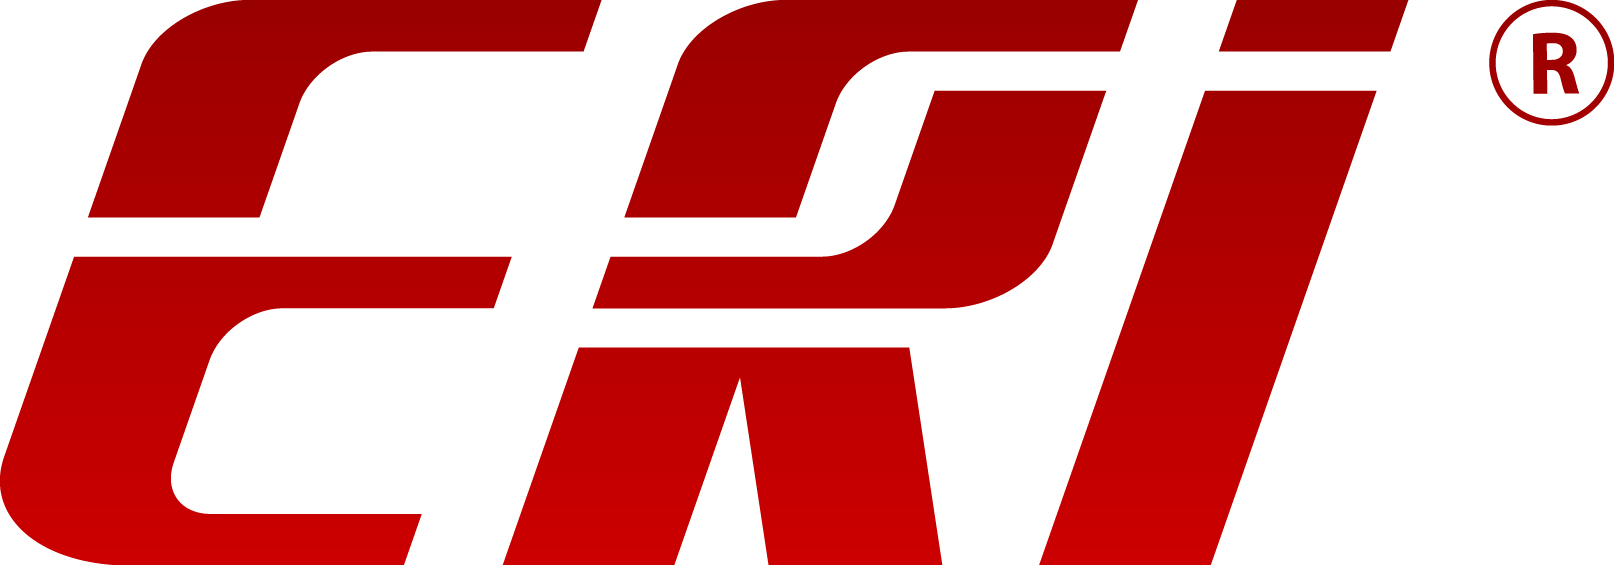 eri-logo-only_hires (2)